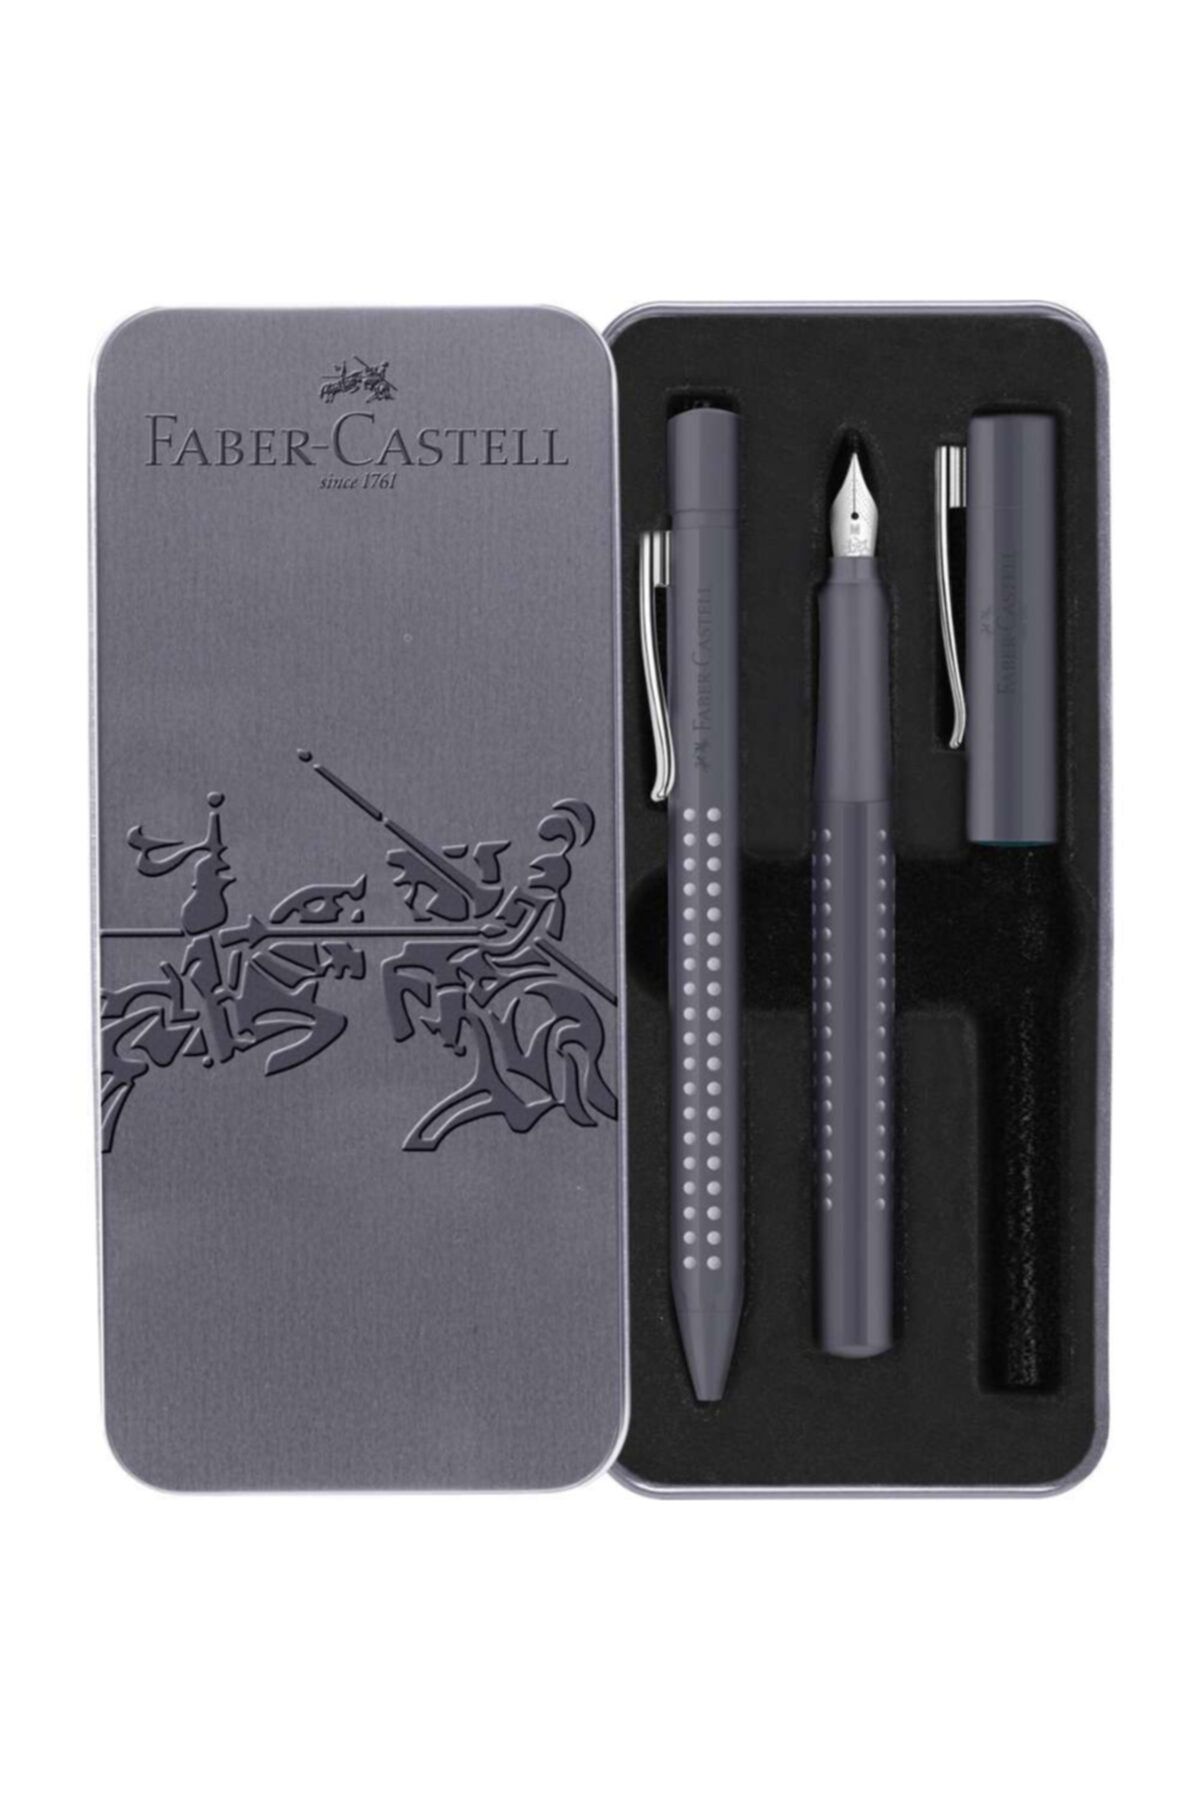 Faber Castell Faber-castell Grip 2010 Dolma + Tükenmez Kalem Set Dapple Gray Rengi